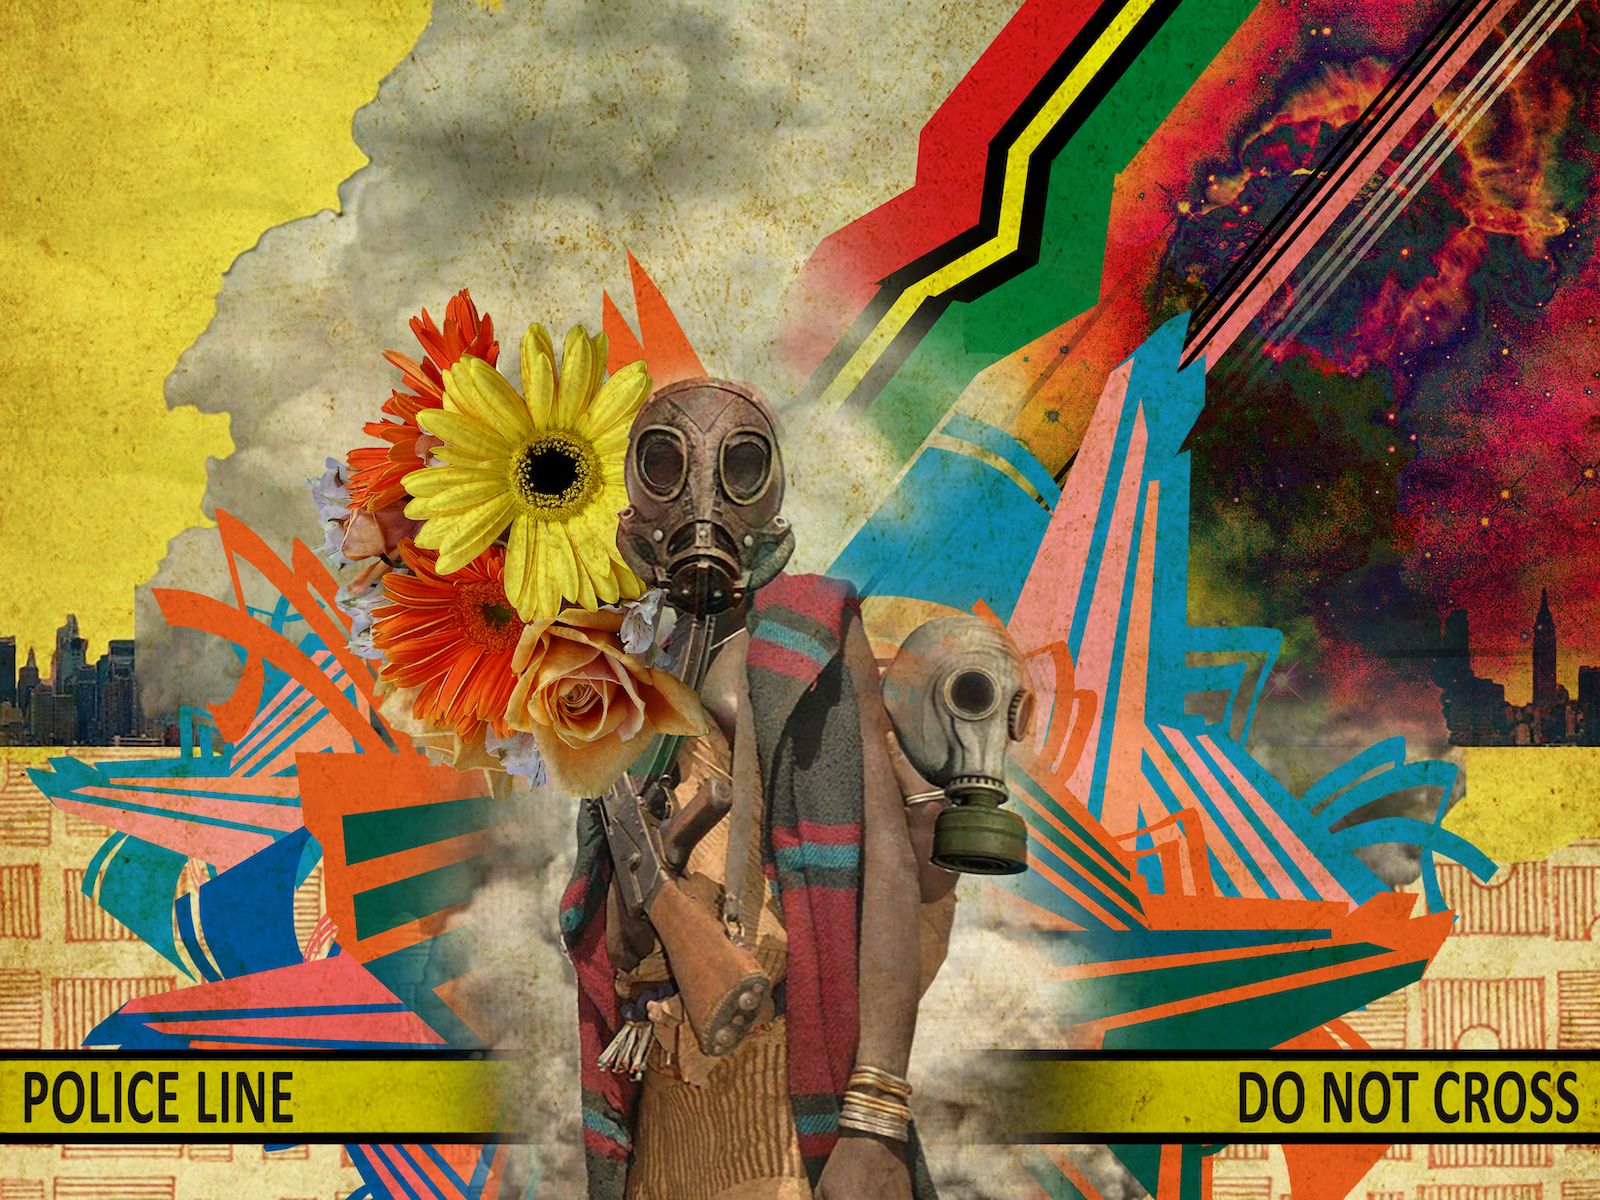 57 Wallpaper ideas | afrofuturism art, afrofuturism, afro art